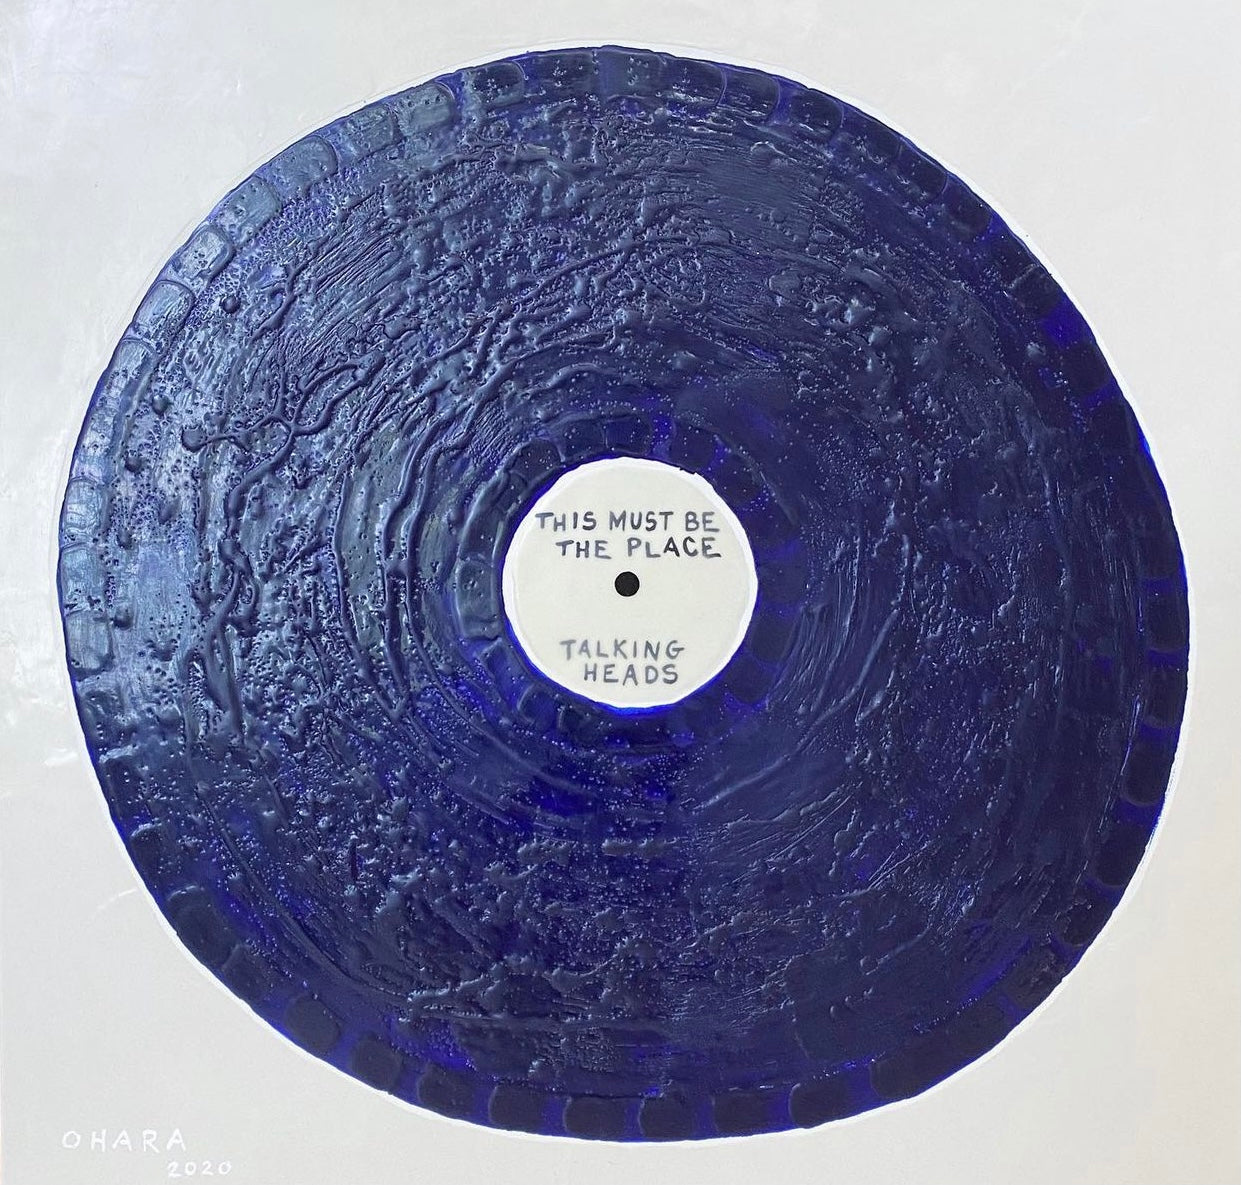 30" Custom Vinyl in Color - Your Favorite Song